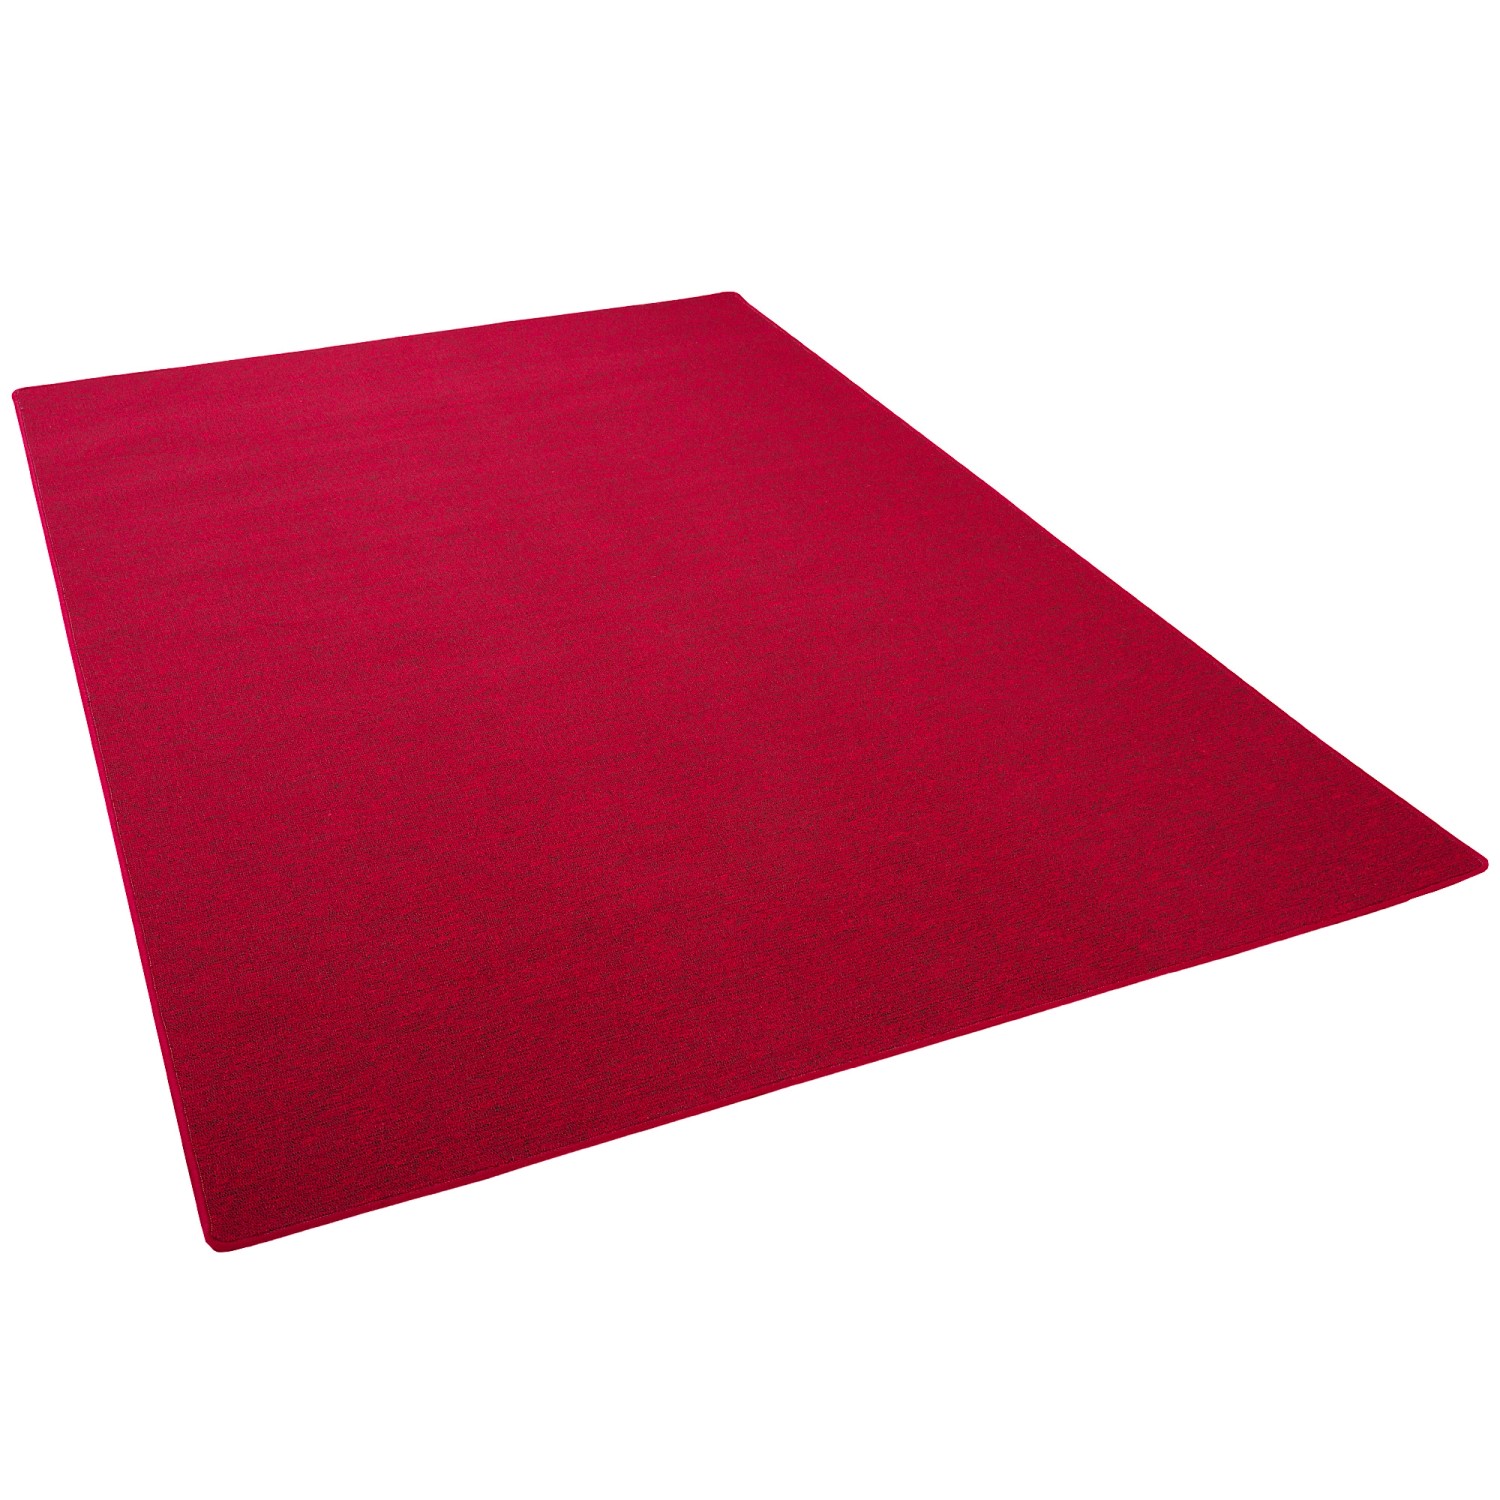 Snapstyle Feinschlingen Velour Teppich Strong Rot 160x160cm günstig online kaufen